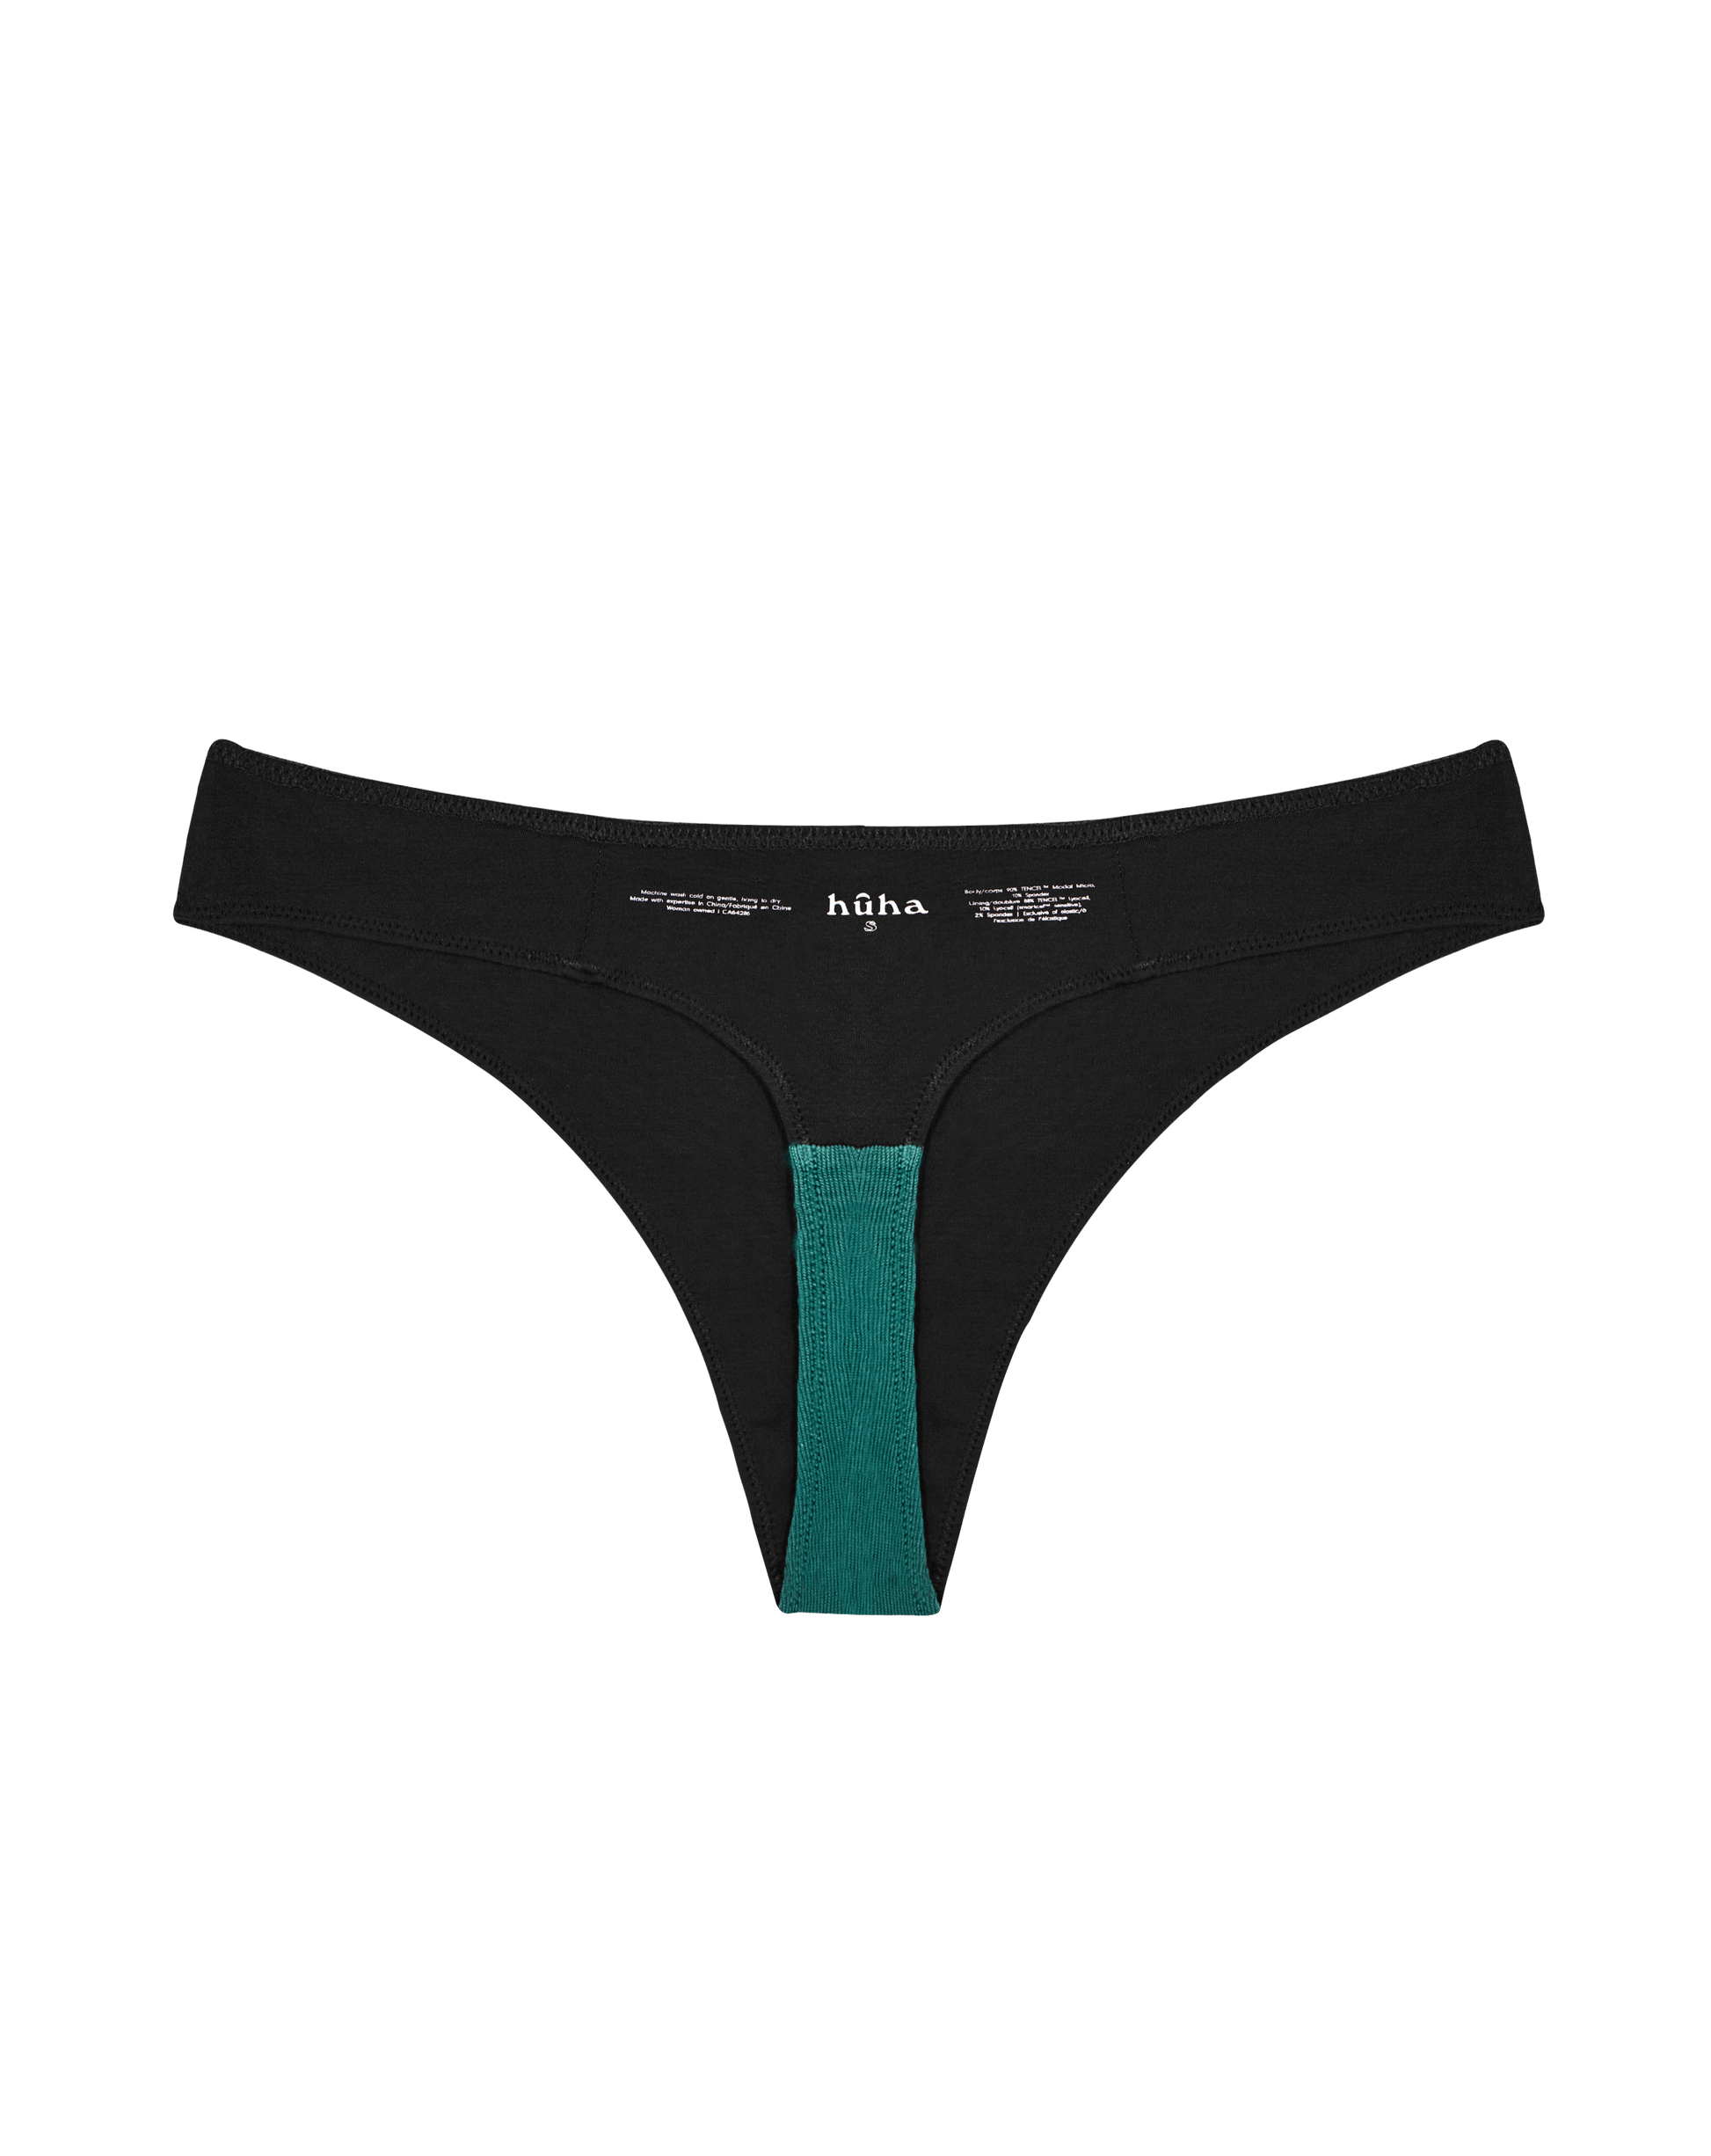 Low Profile Thong – huha underwear